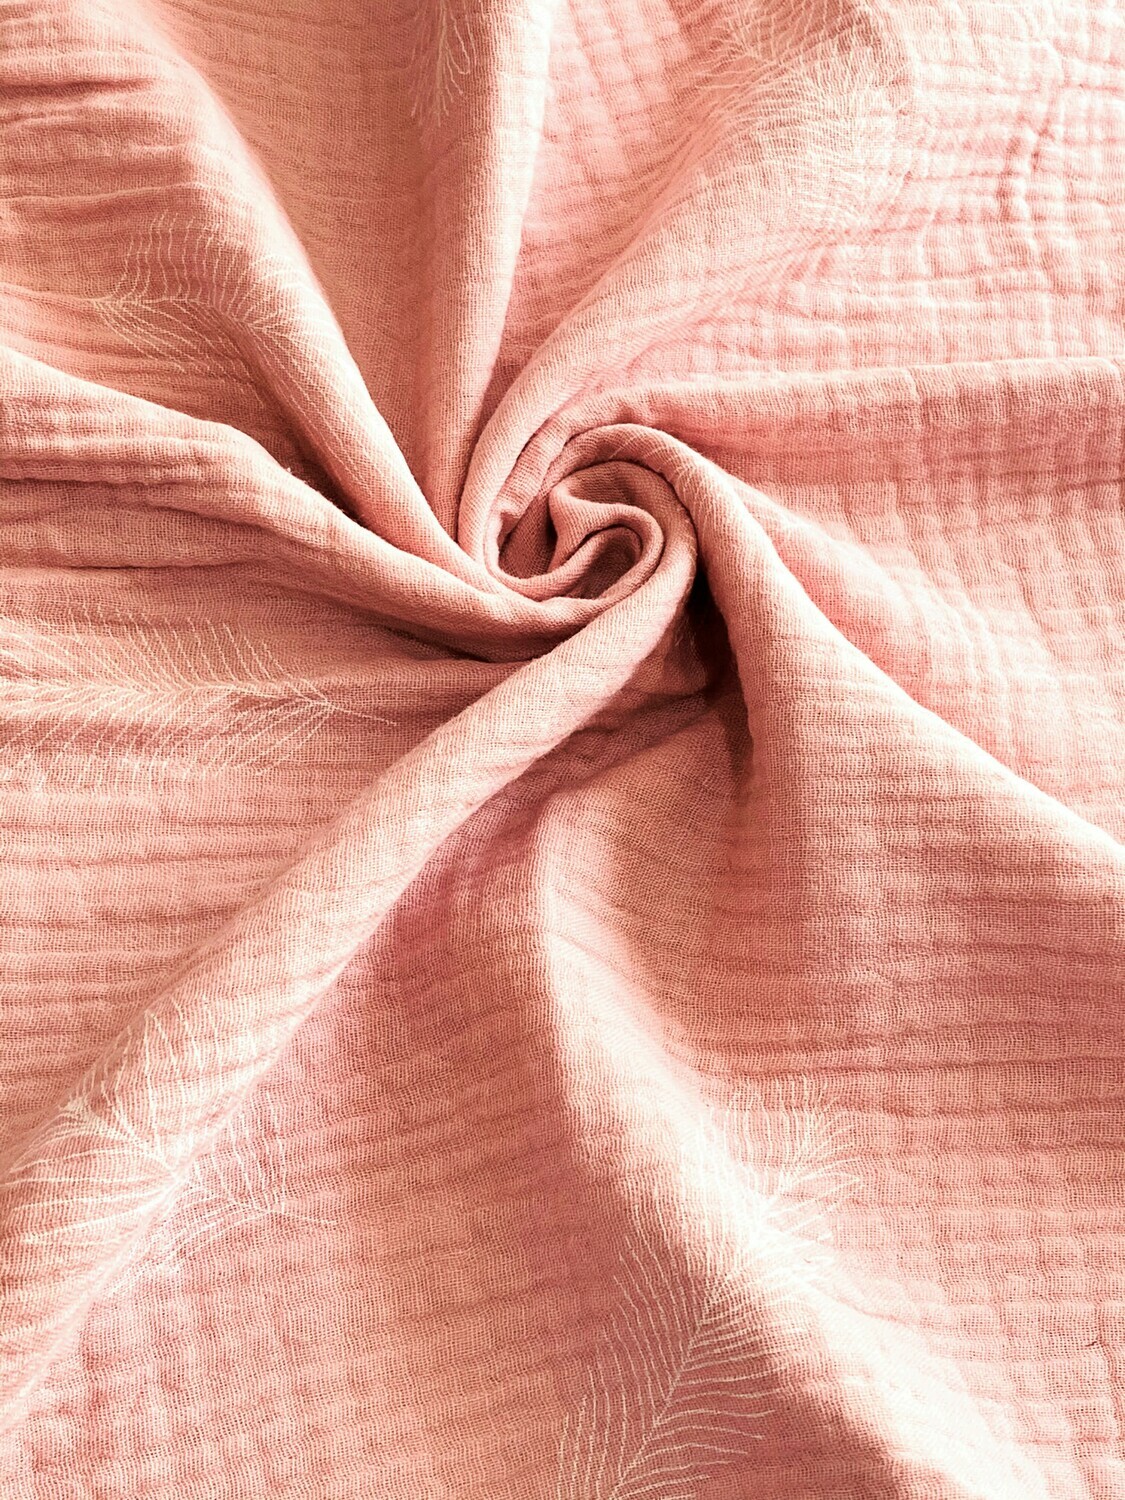 Feathers, Pastel Pink | Double Gauze Muslin | 135cm wide  - 0.95m Piece